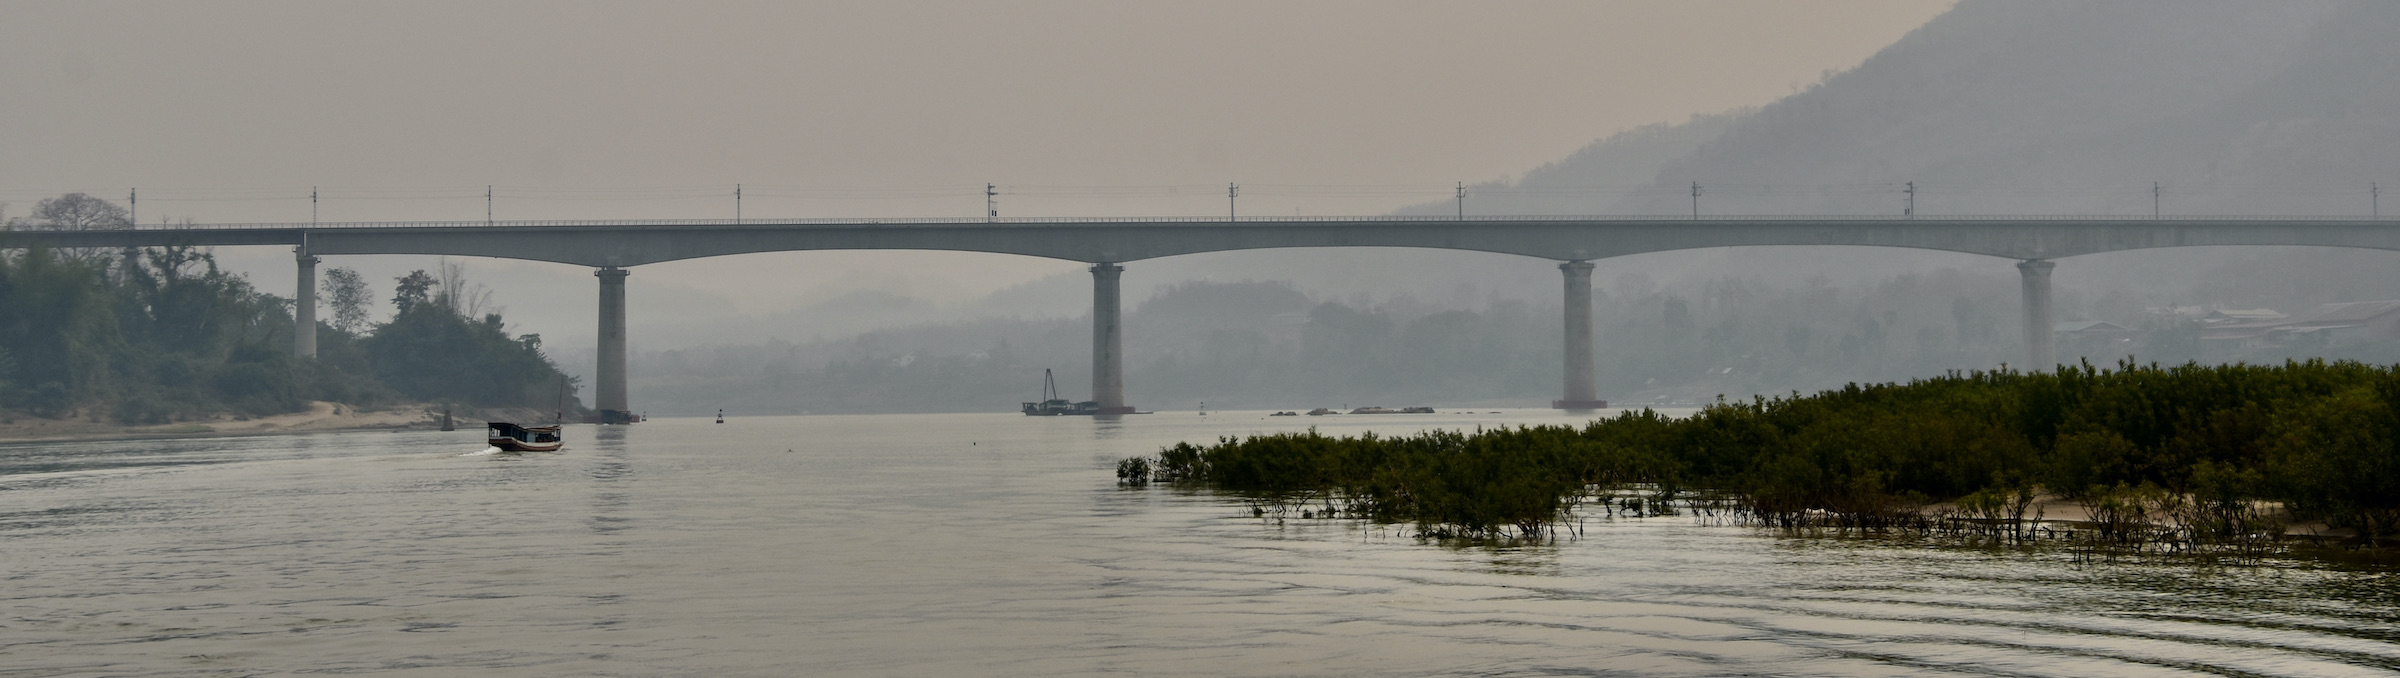 Train Bridge to China over the Mekong River